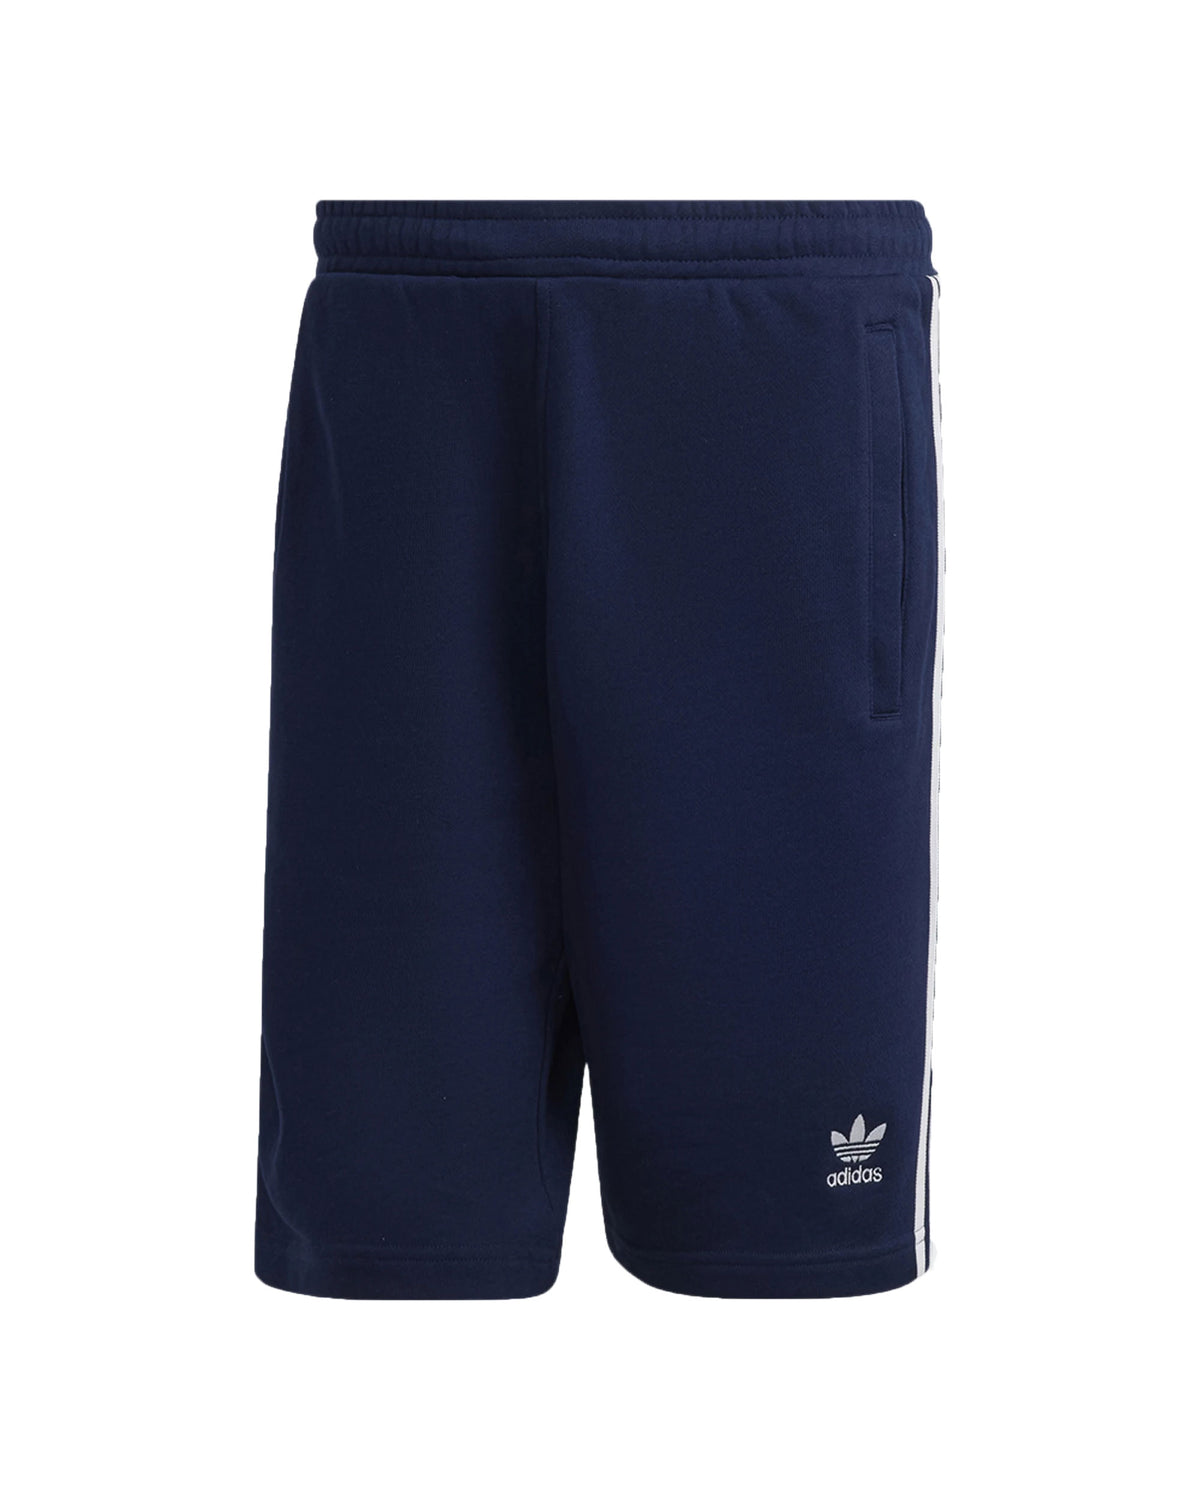 Bermuda Uomo Adidas Originals 3 Stripe Short Blu